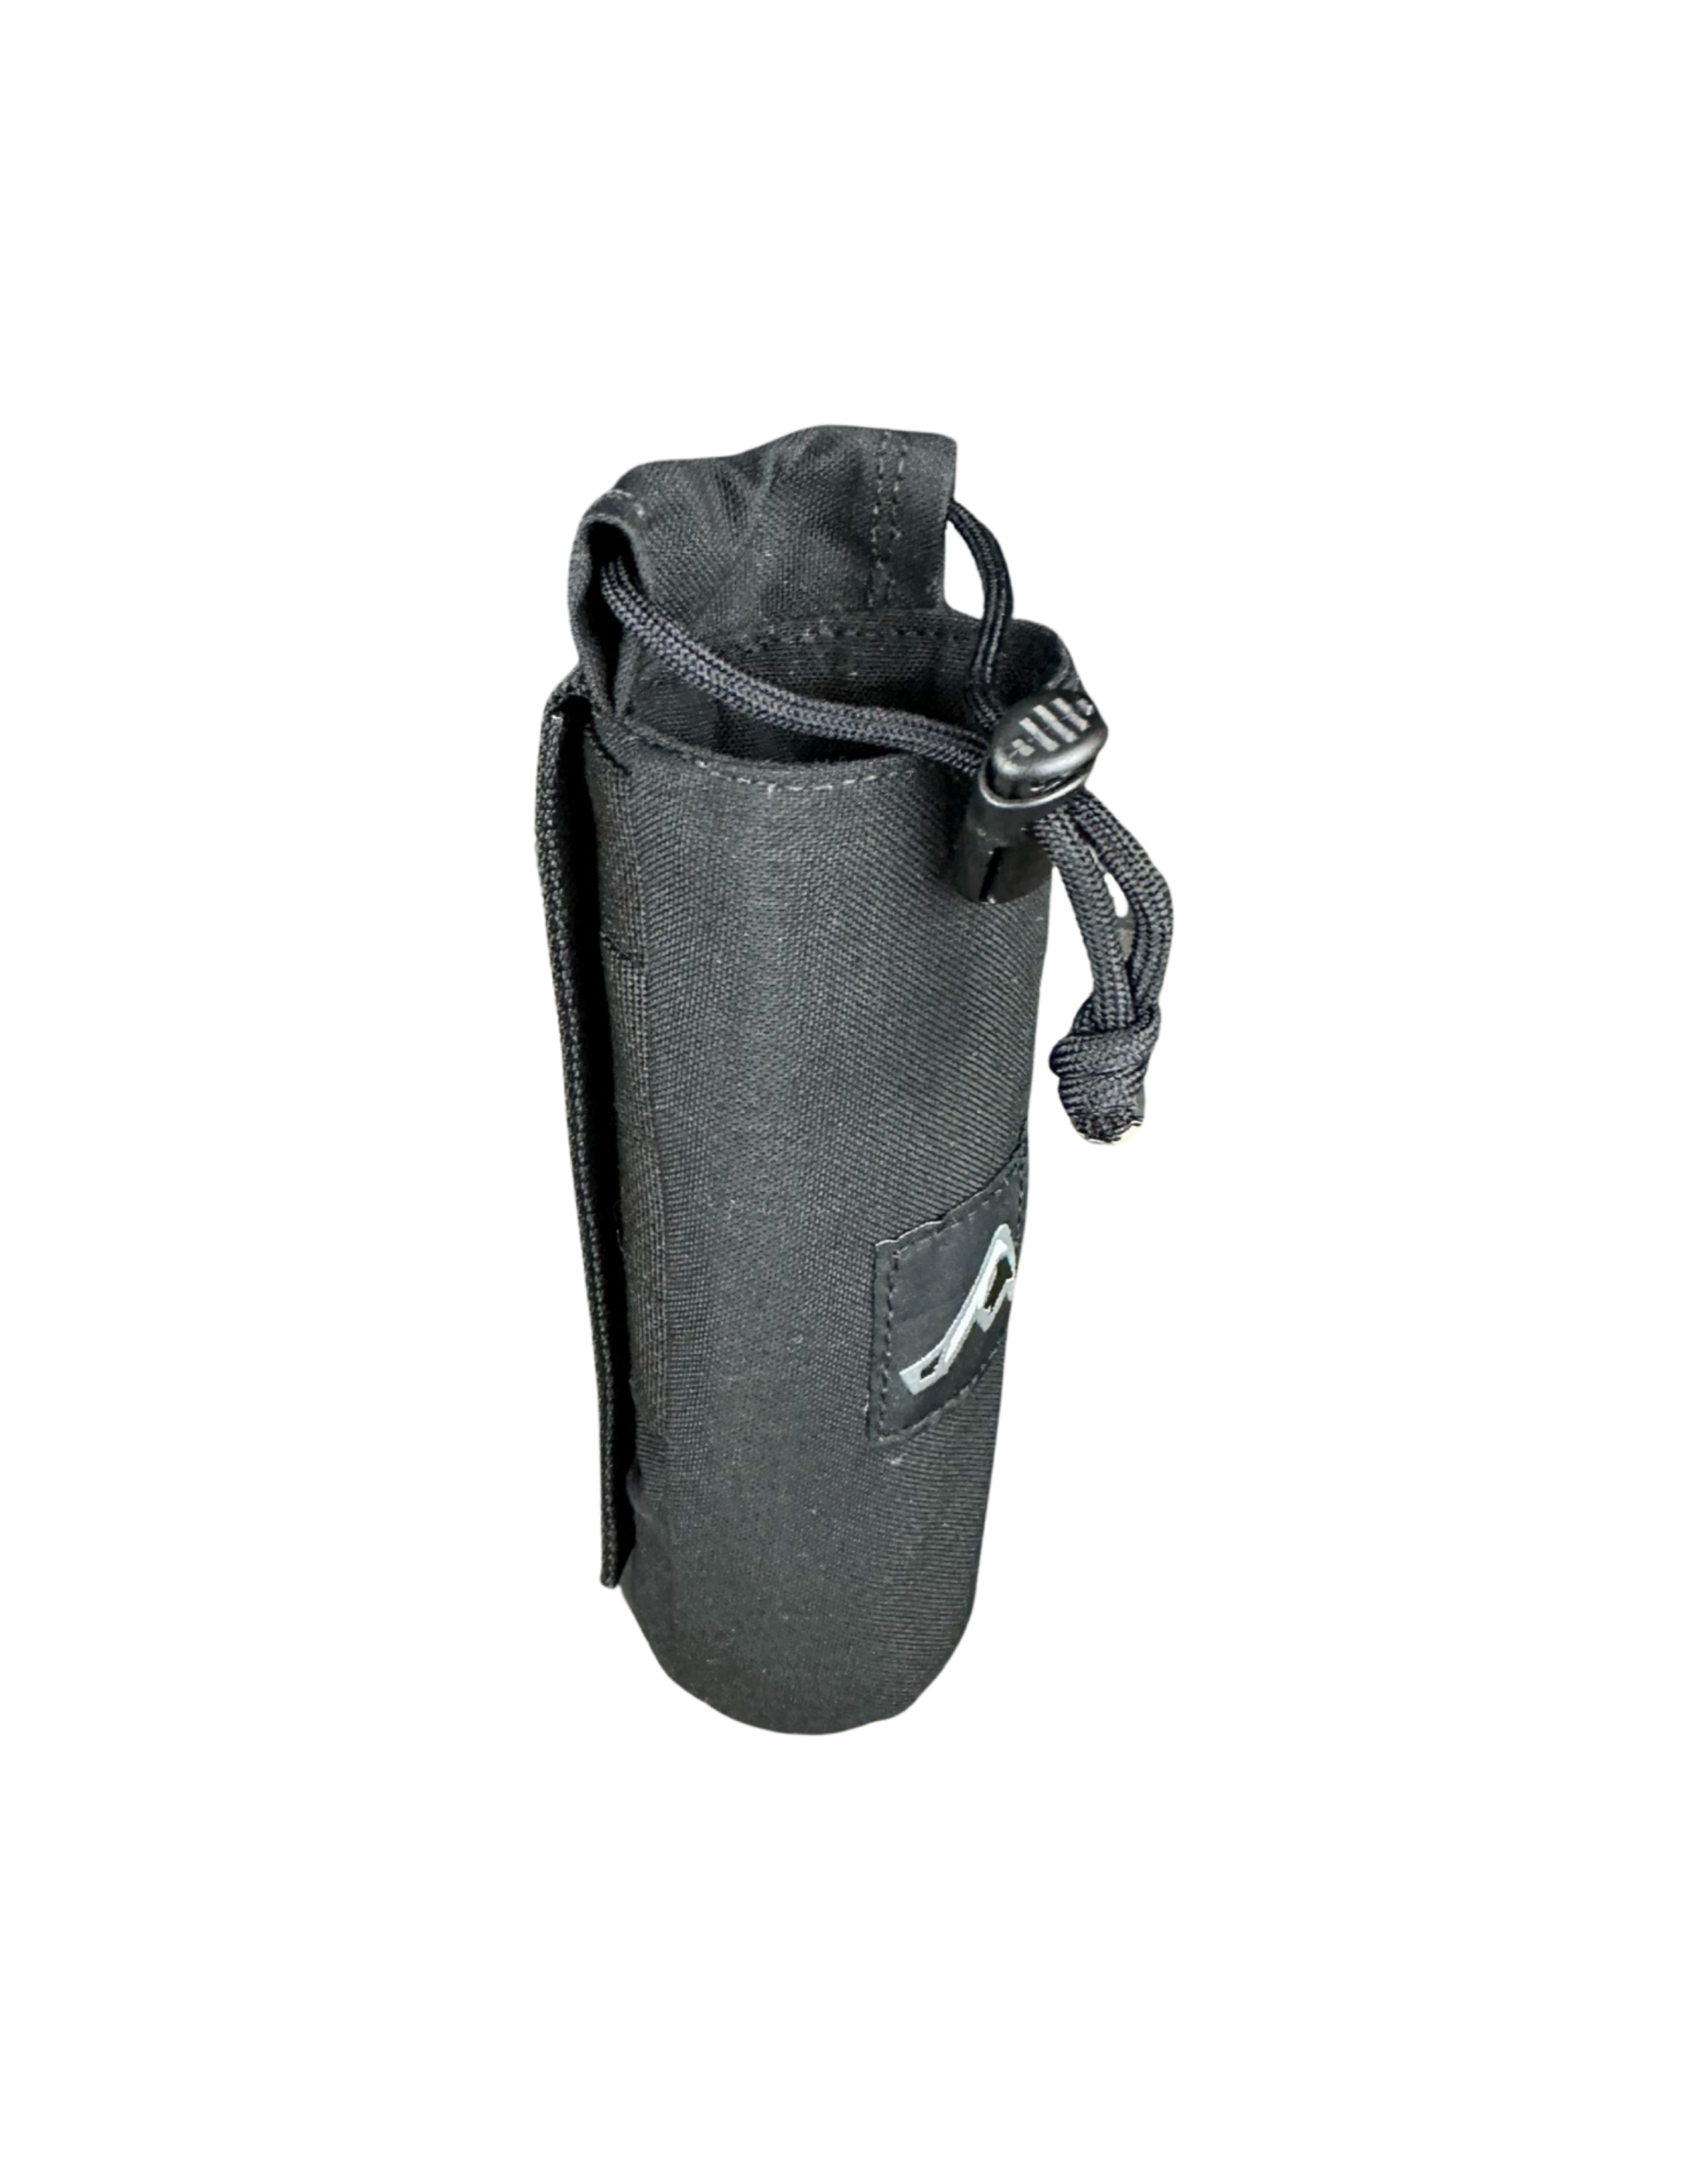 Ruckmule mountain gear MOLLE modular bear spray pouch holster black cordura 